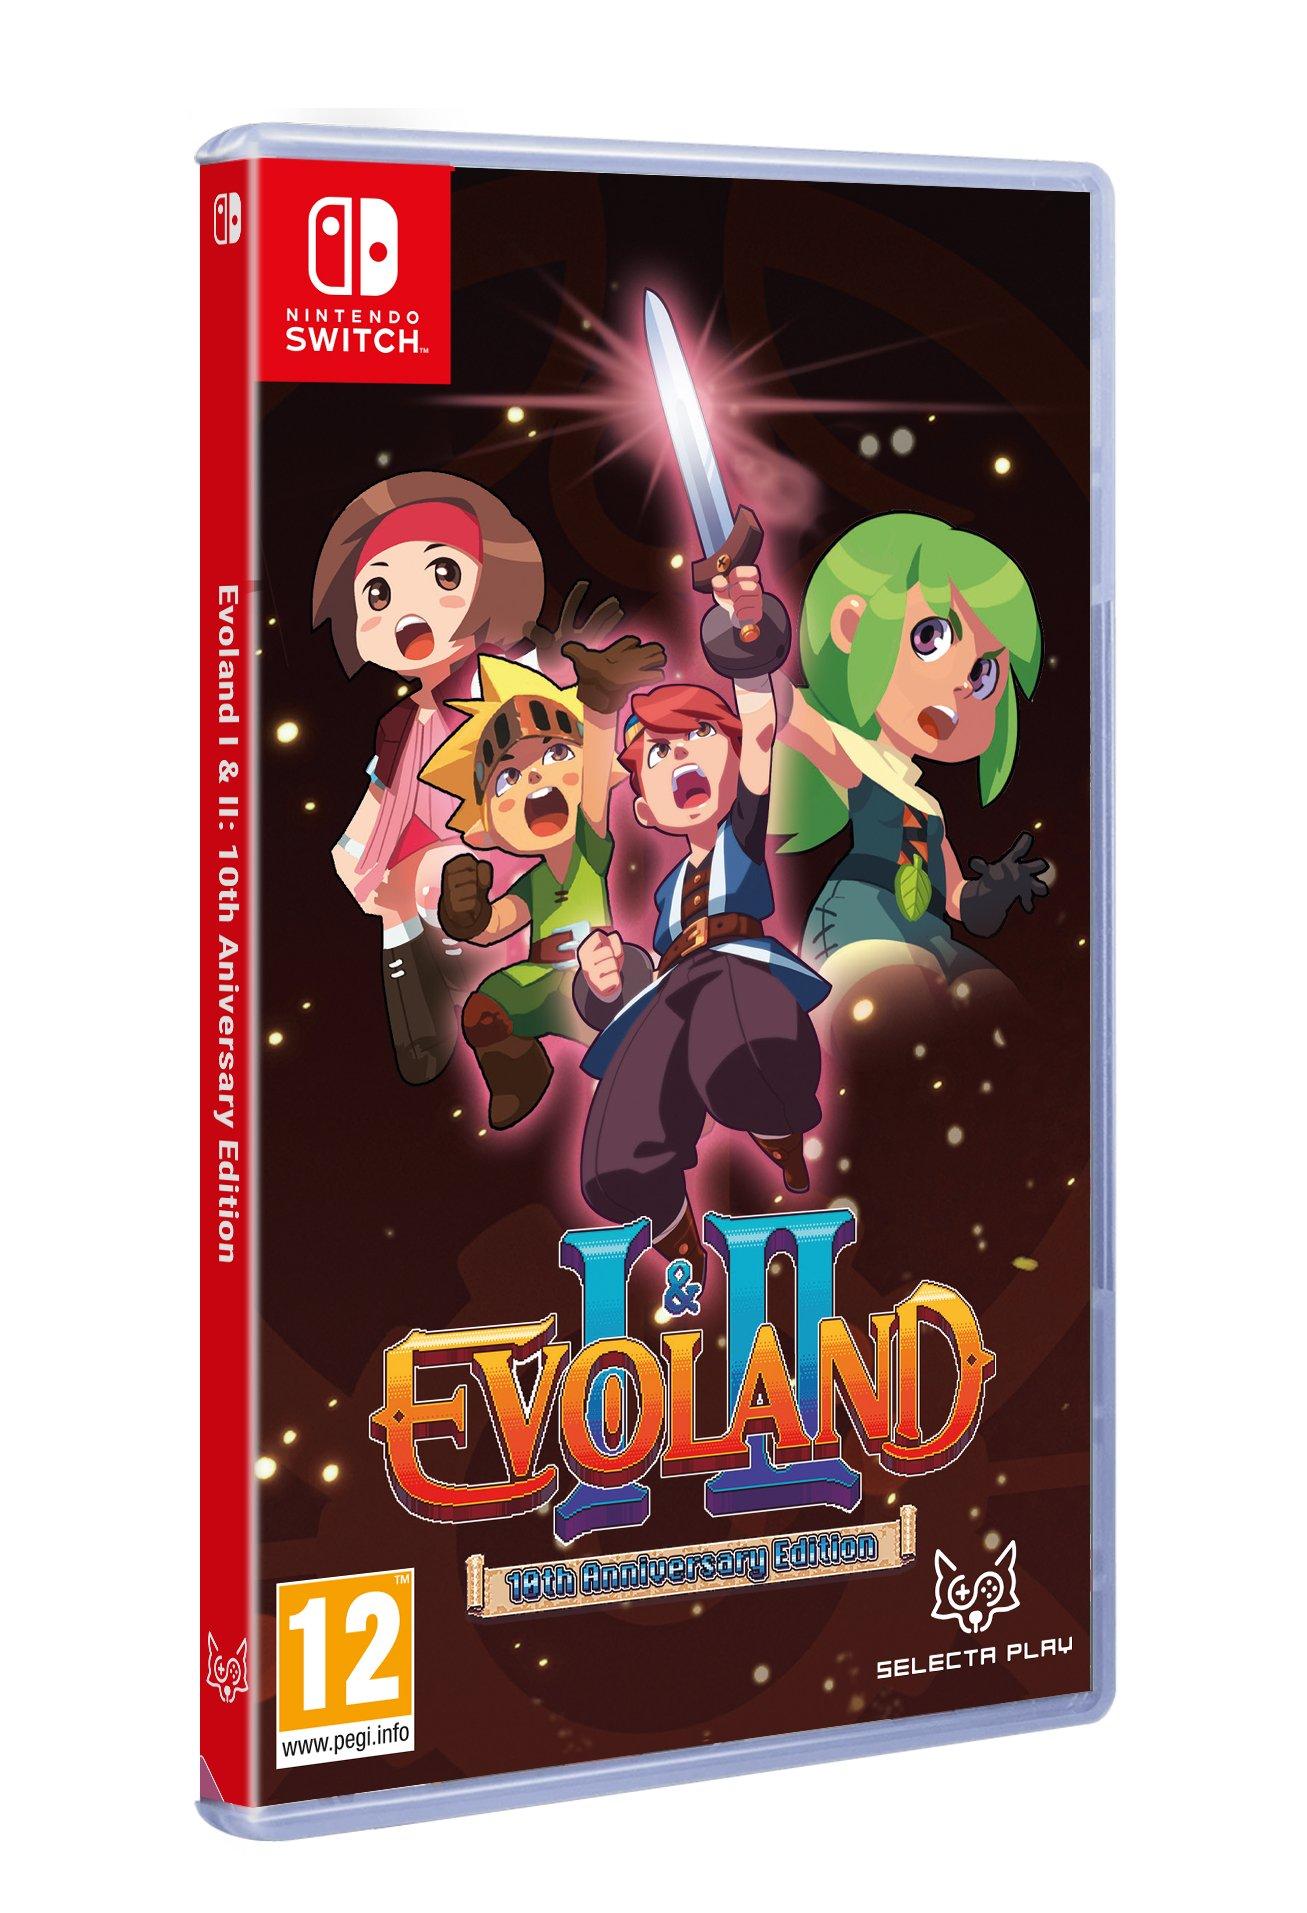 Evoland 1 & 2 - 10th Anniversary Edition - Nintendo Switch